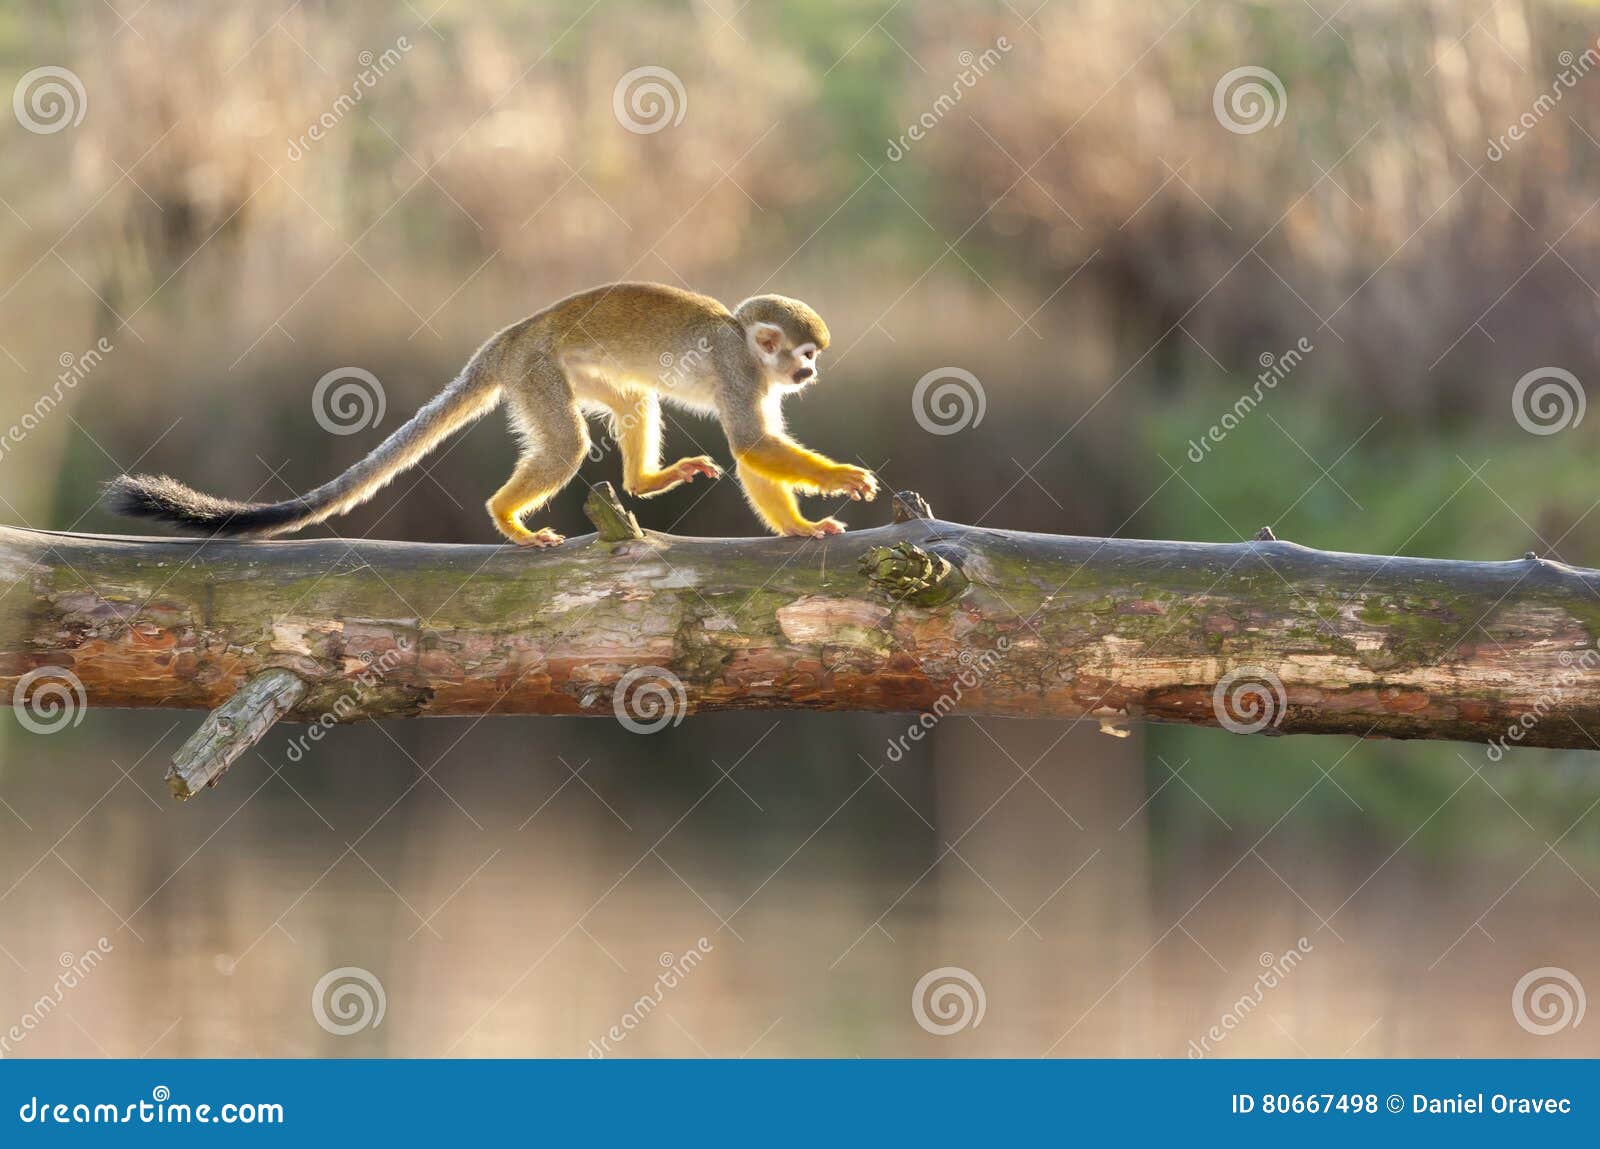 saimiri sciureus - squirrel monkey